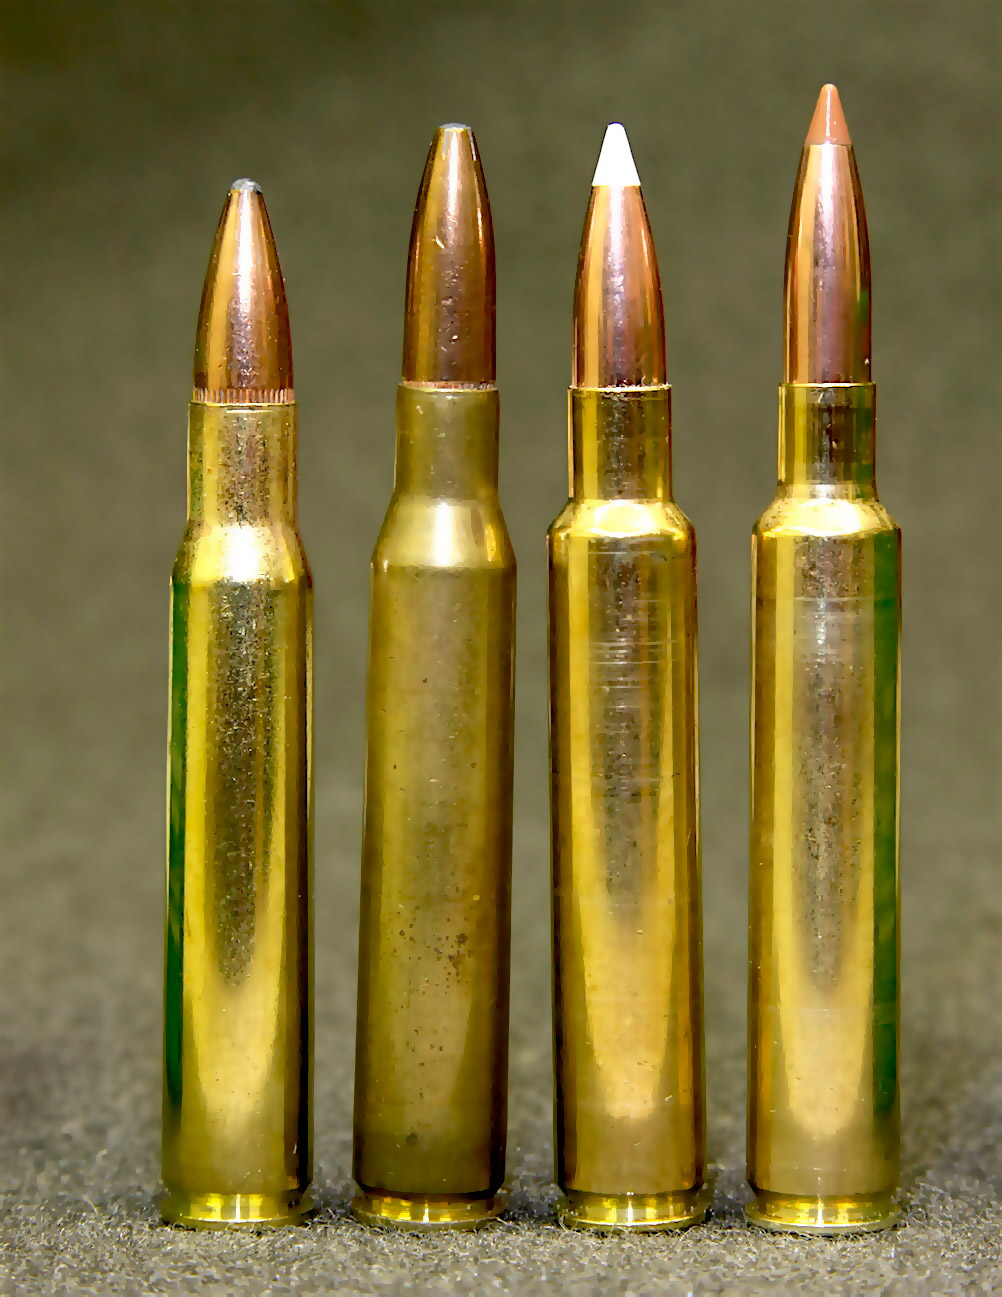 Best 280 Remington Ammo